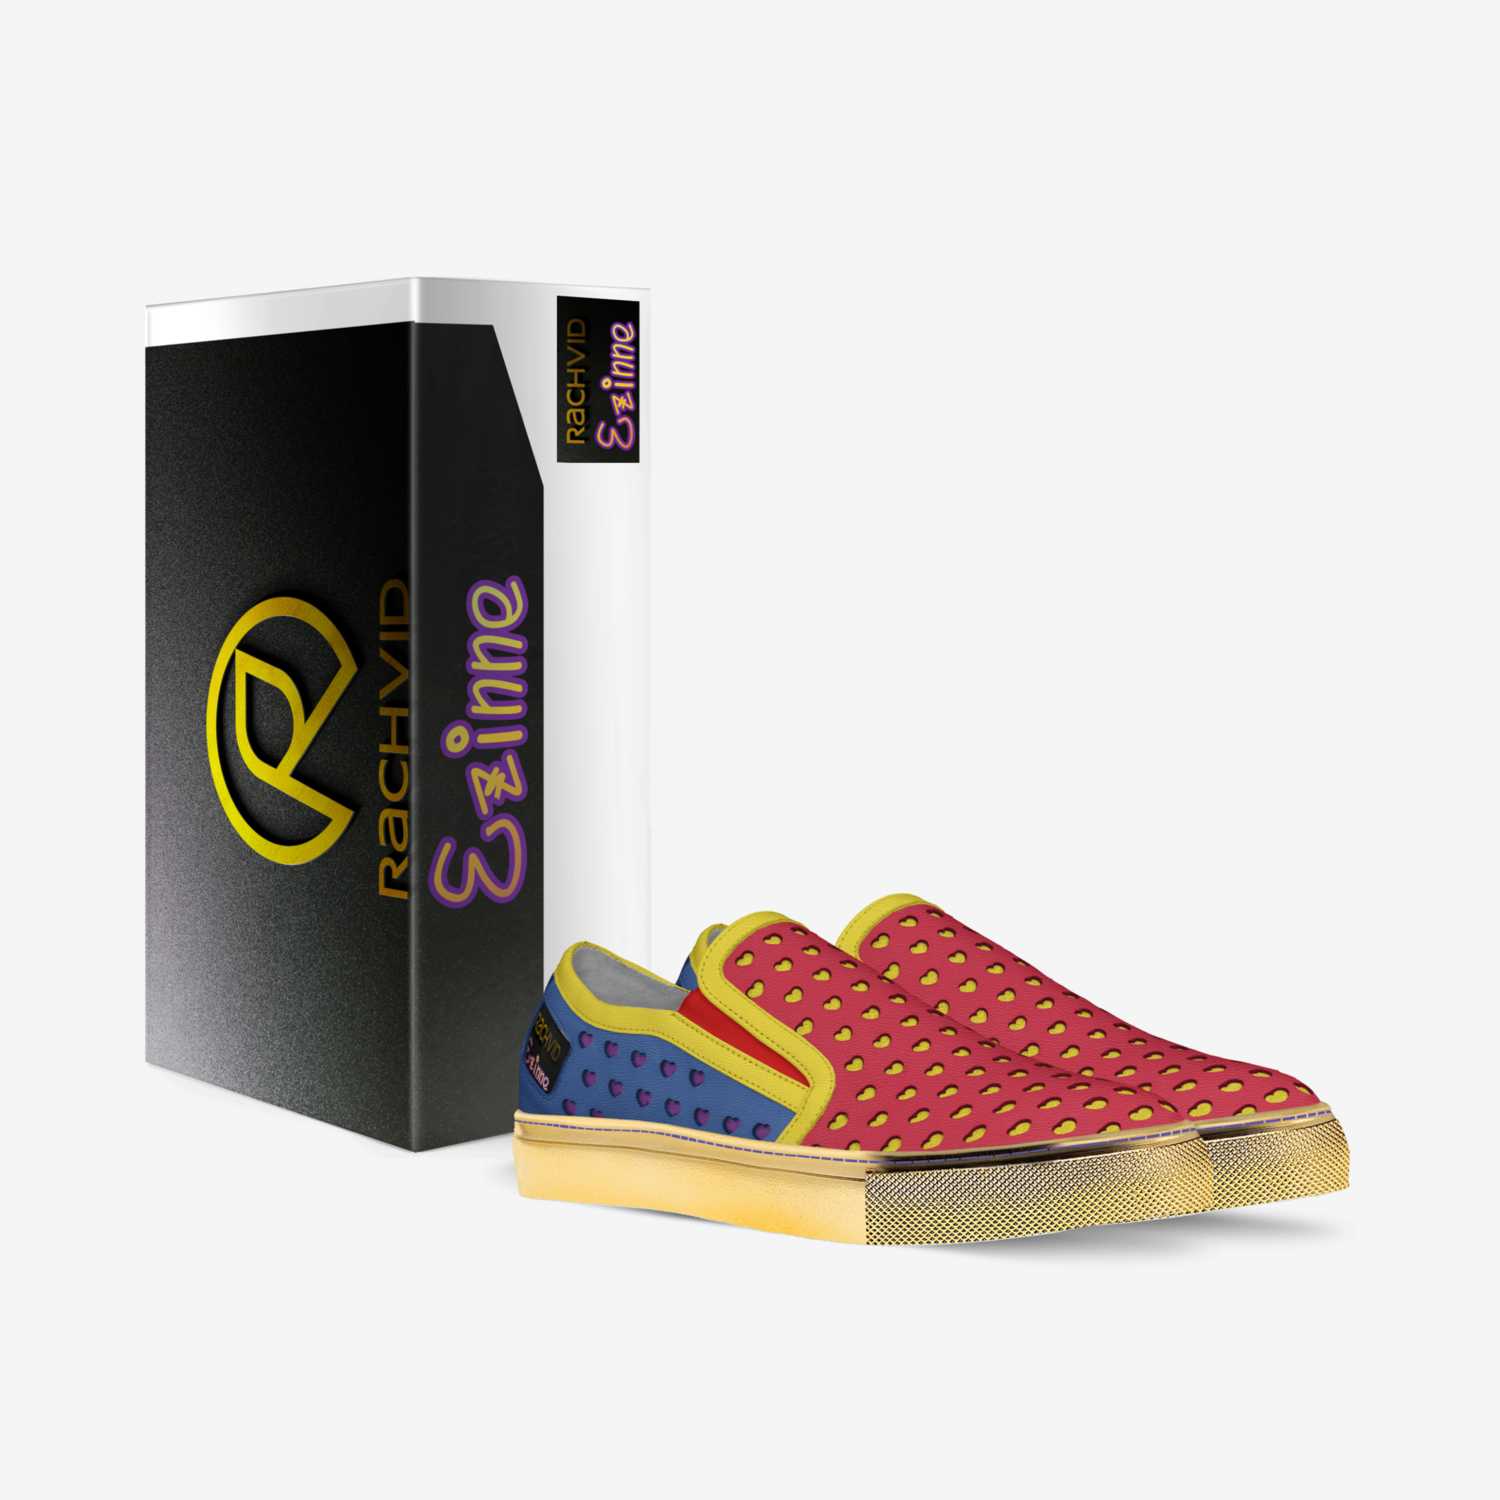 Rachvid Ezinne custom made in Italy shoes by David Ayegba | Box view